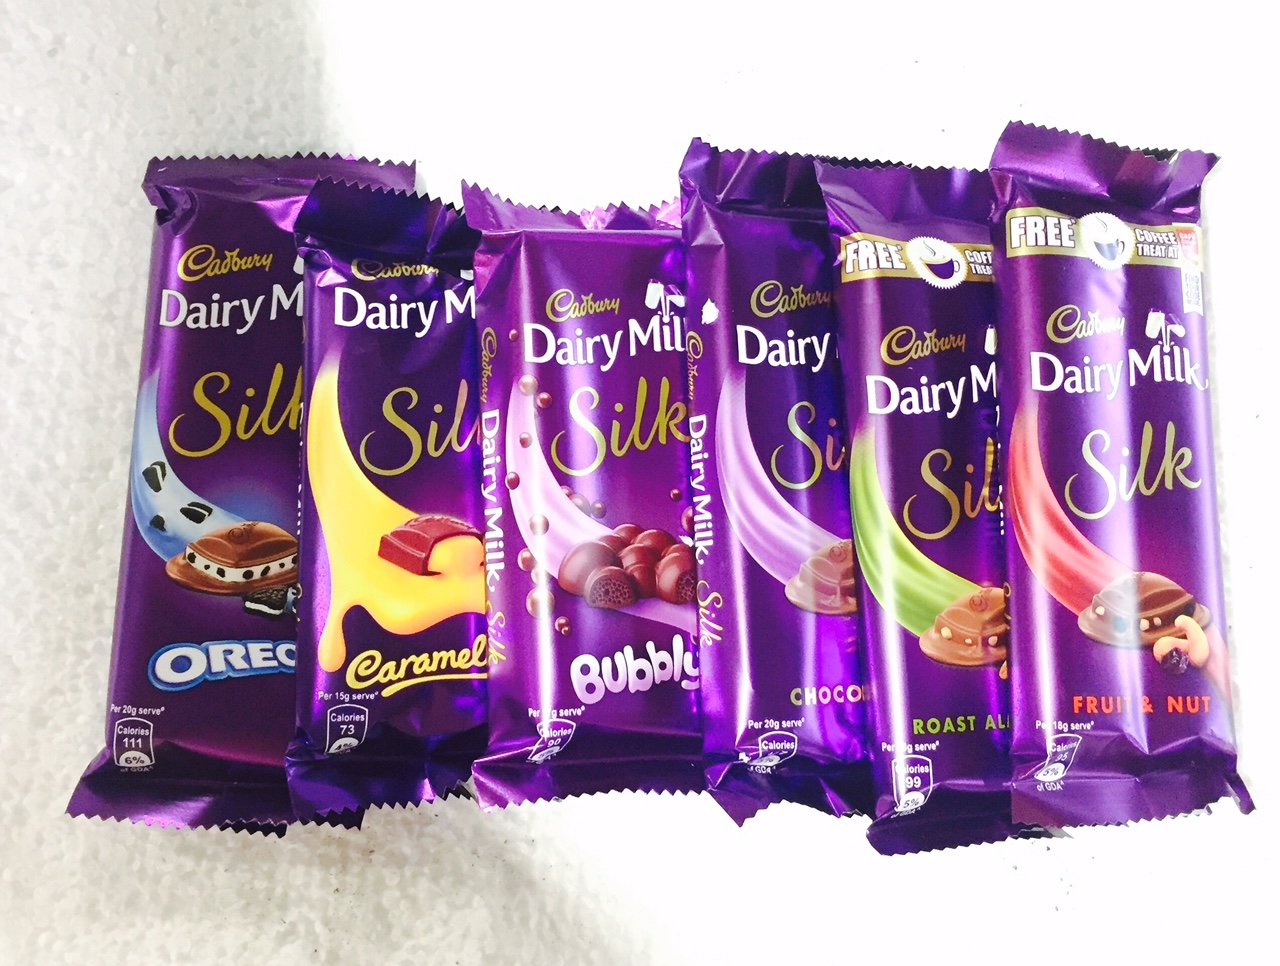 Home Breads Cadbury Dairy Milk Silk Combo Pack (Pack Of 6)